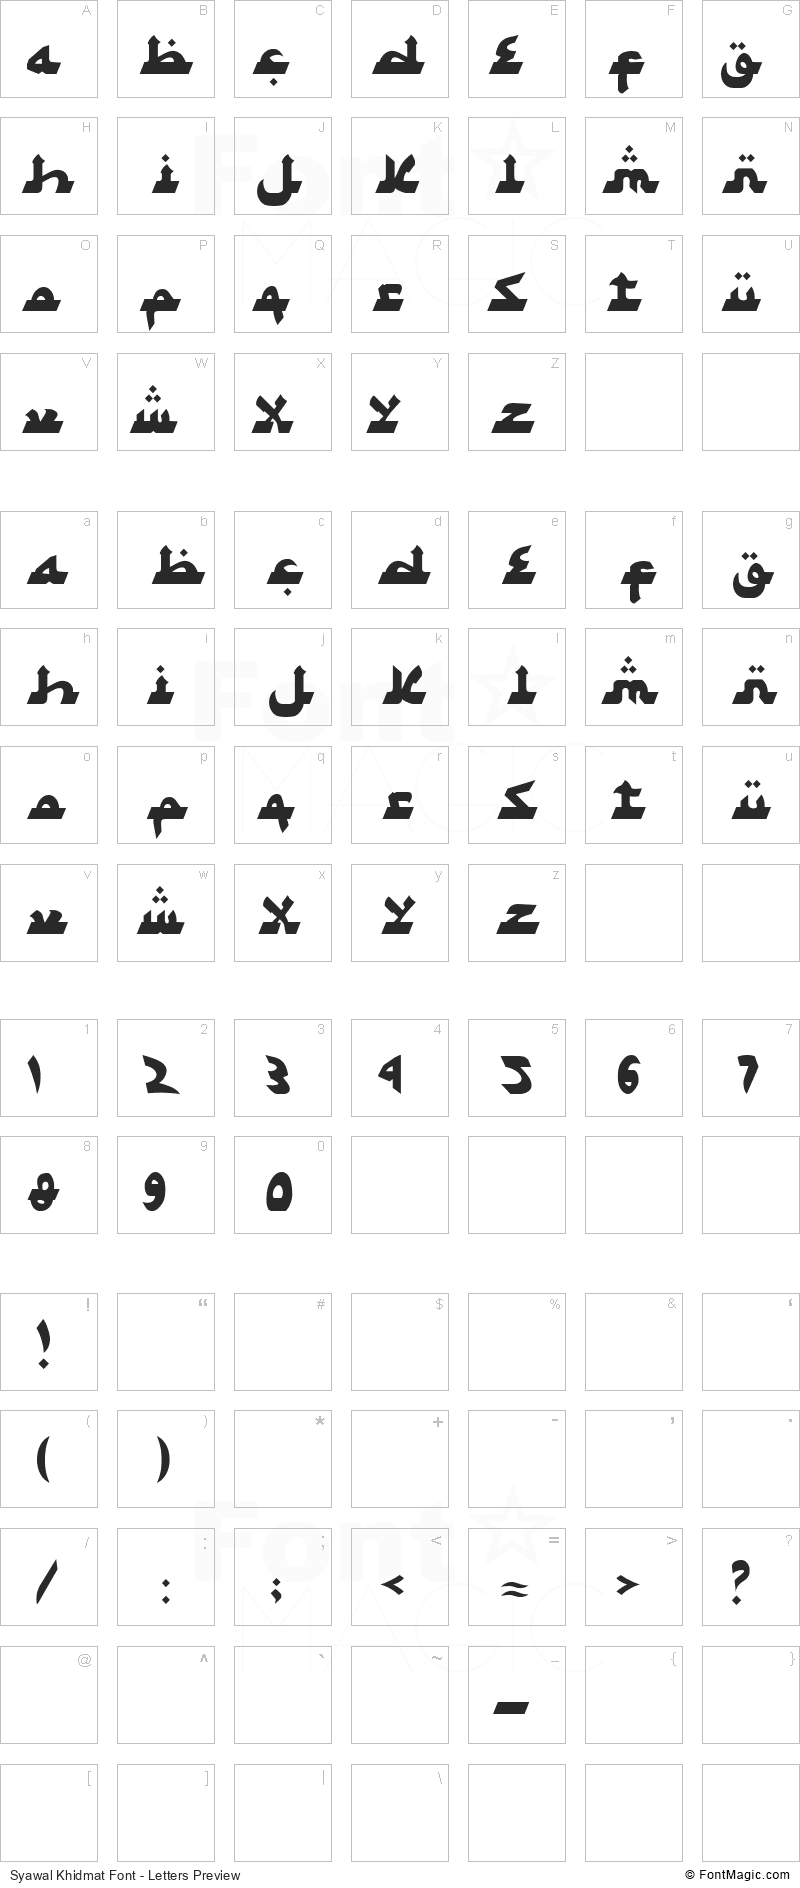 Syawal Khidmat Font - All Latters Preview Chart